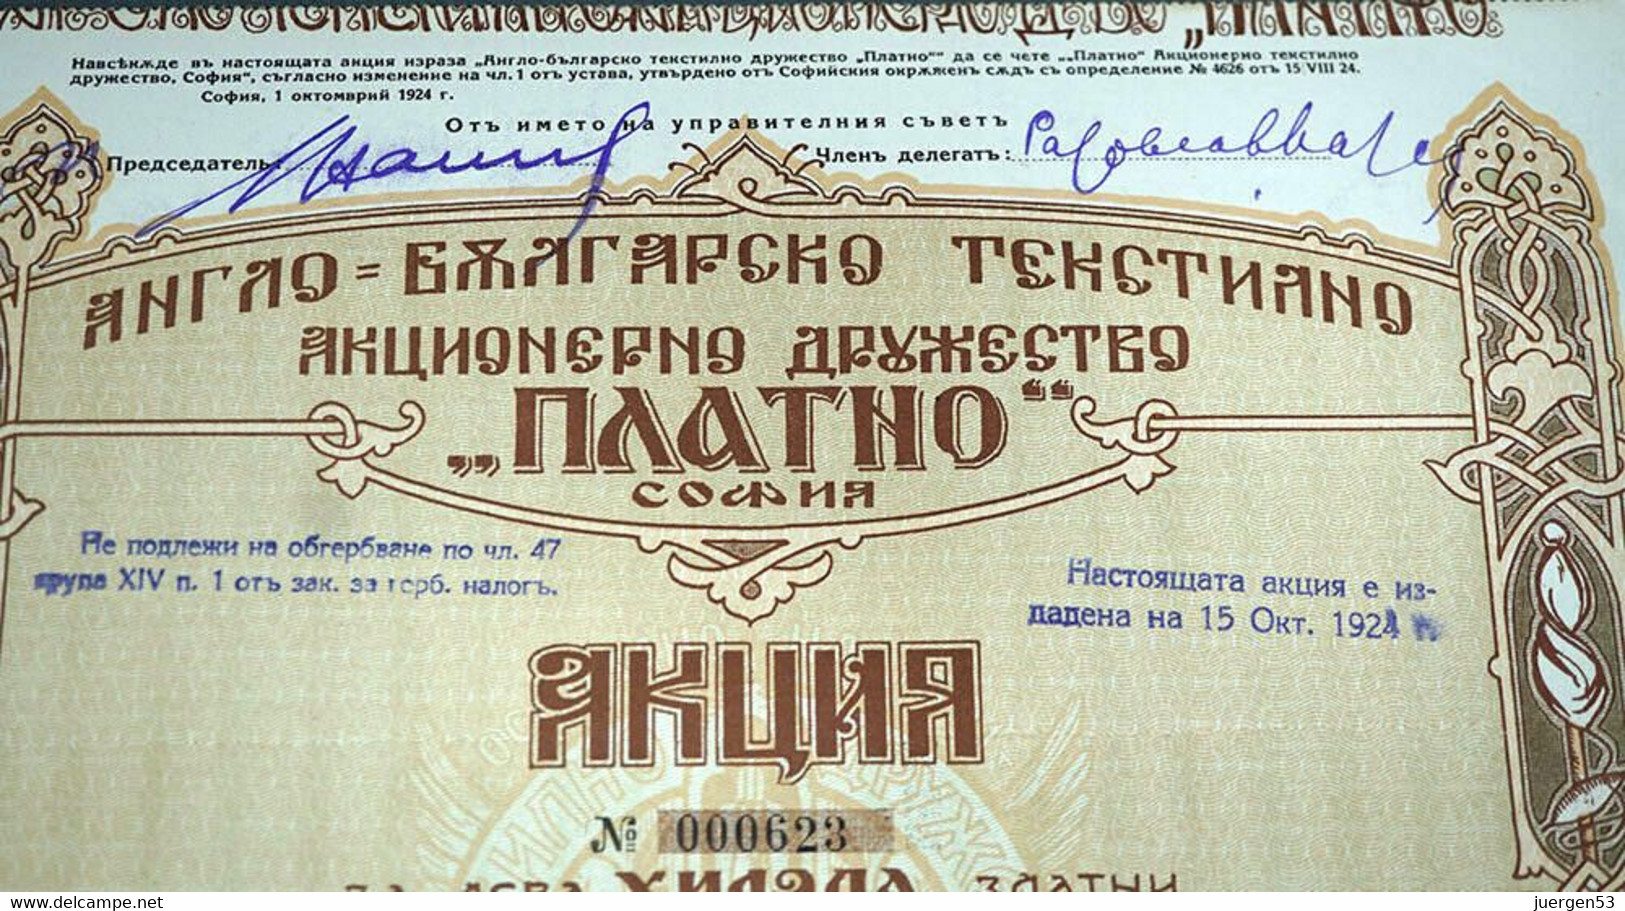 British Bulgarian Textile Company ”Platno”, 1923 - Tessili